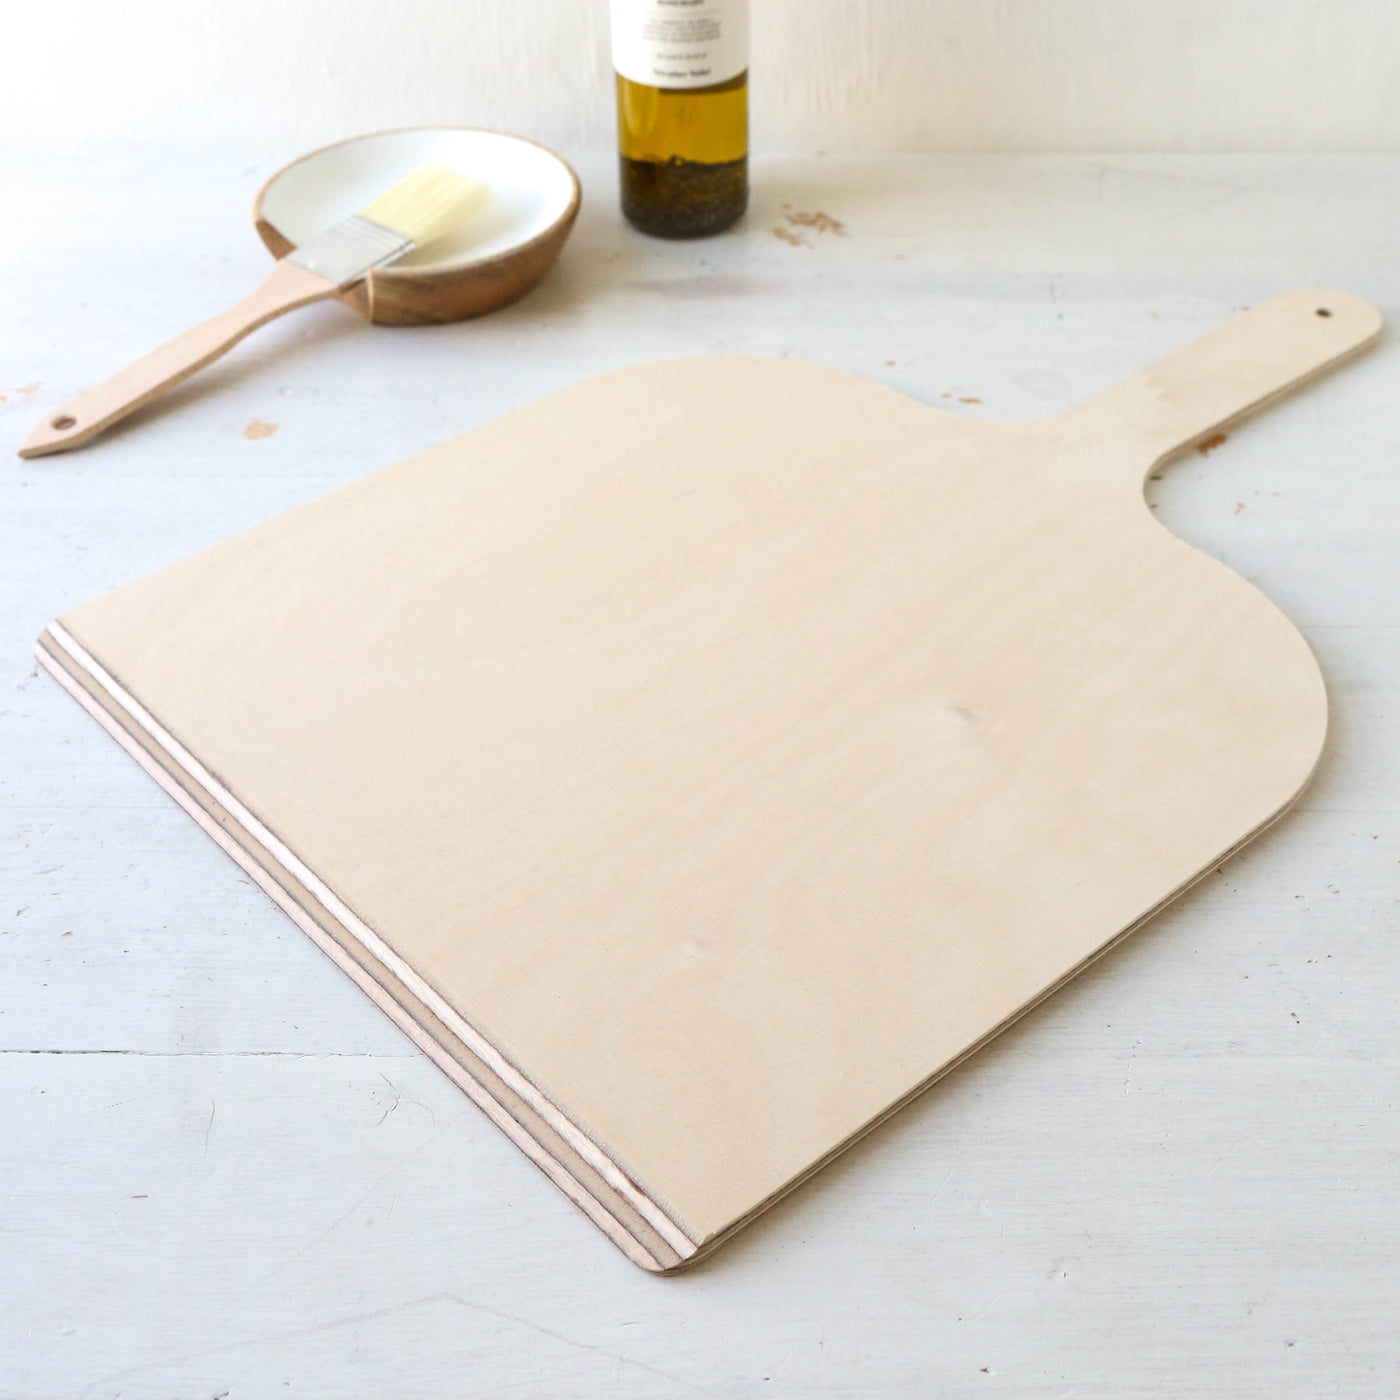 Simple Wooden Pizza Board